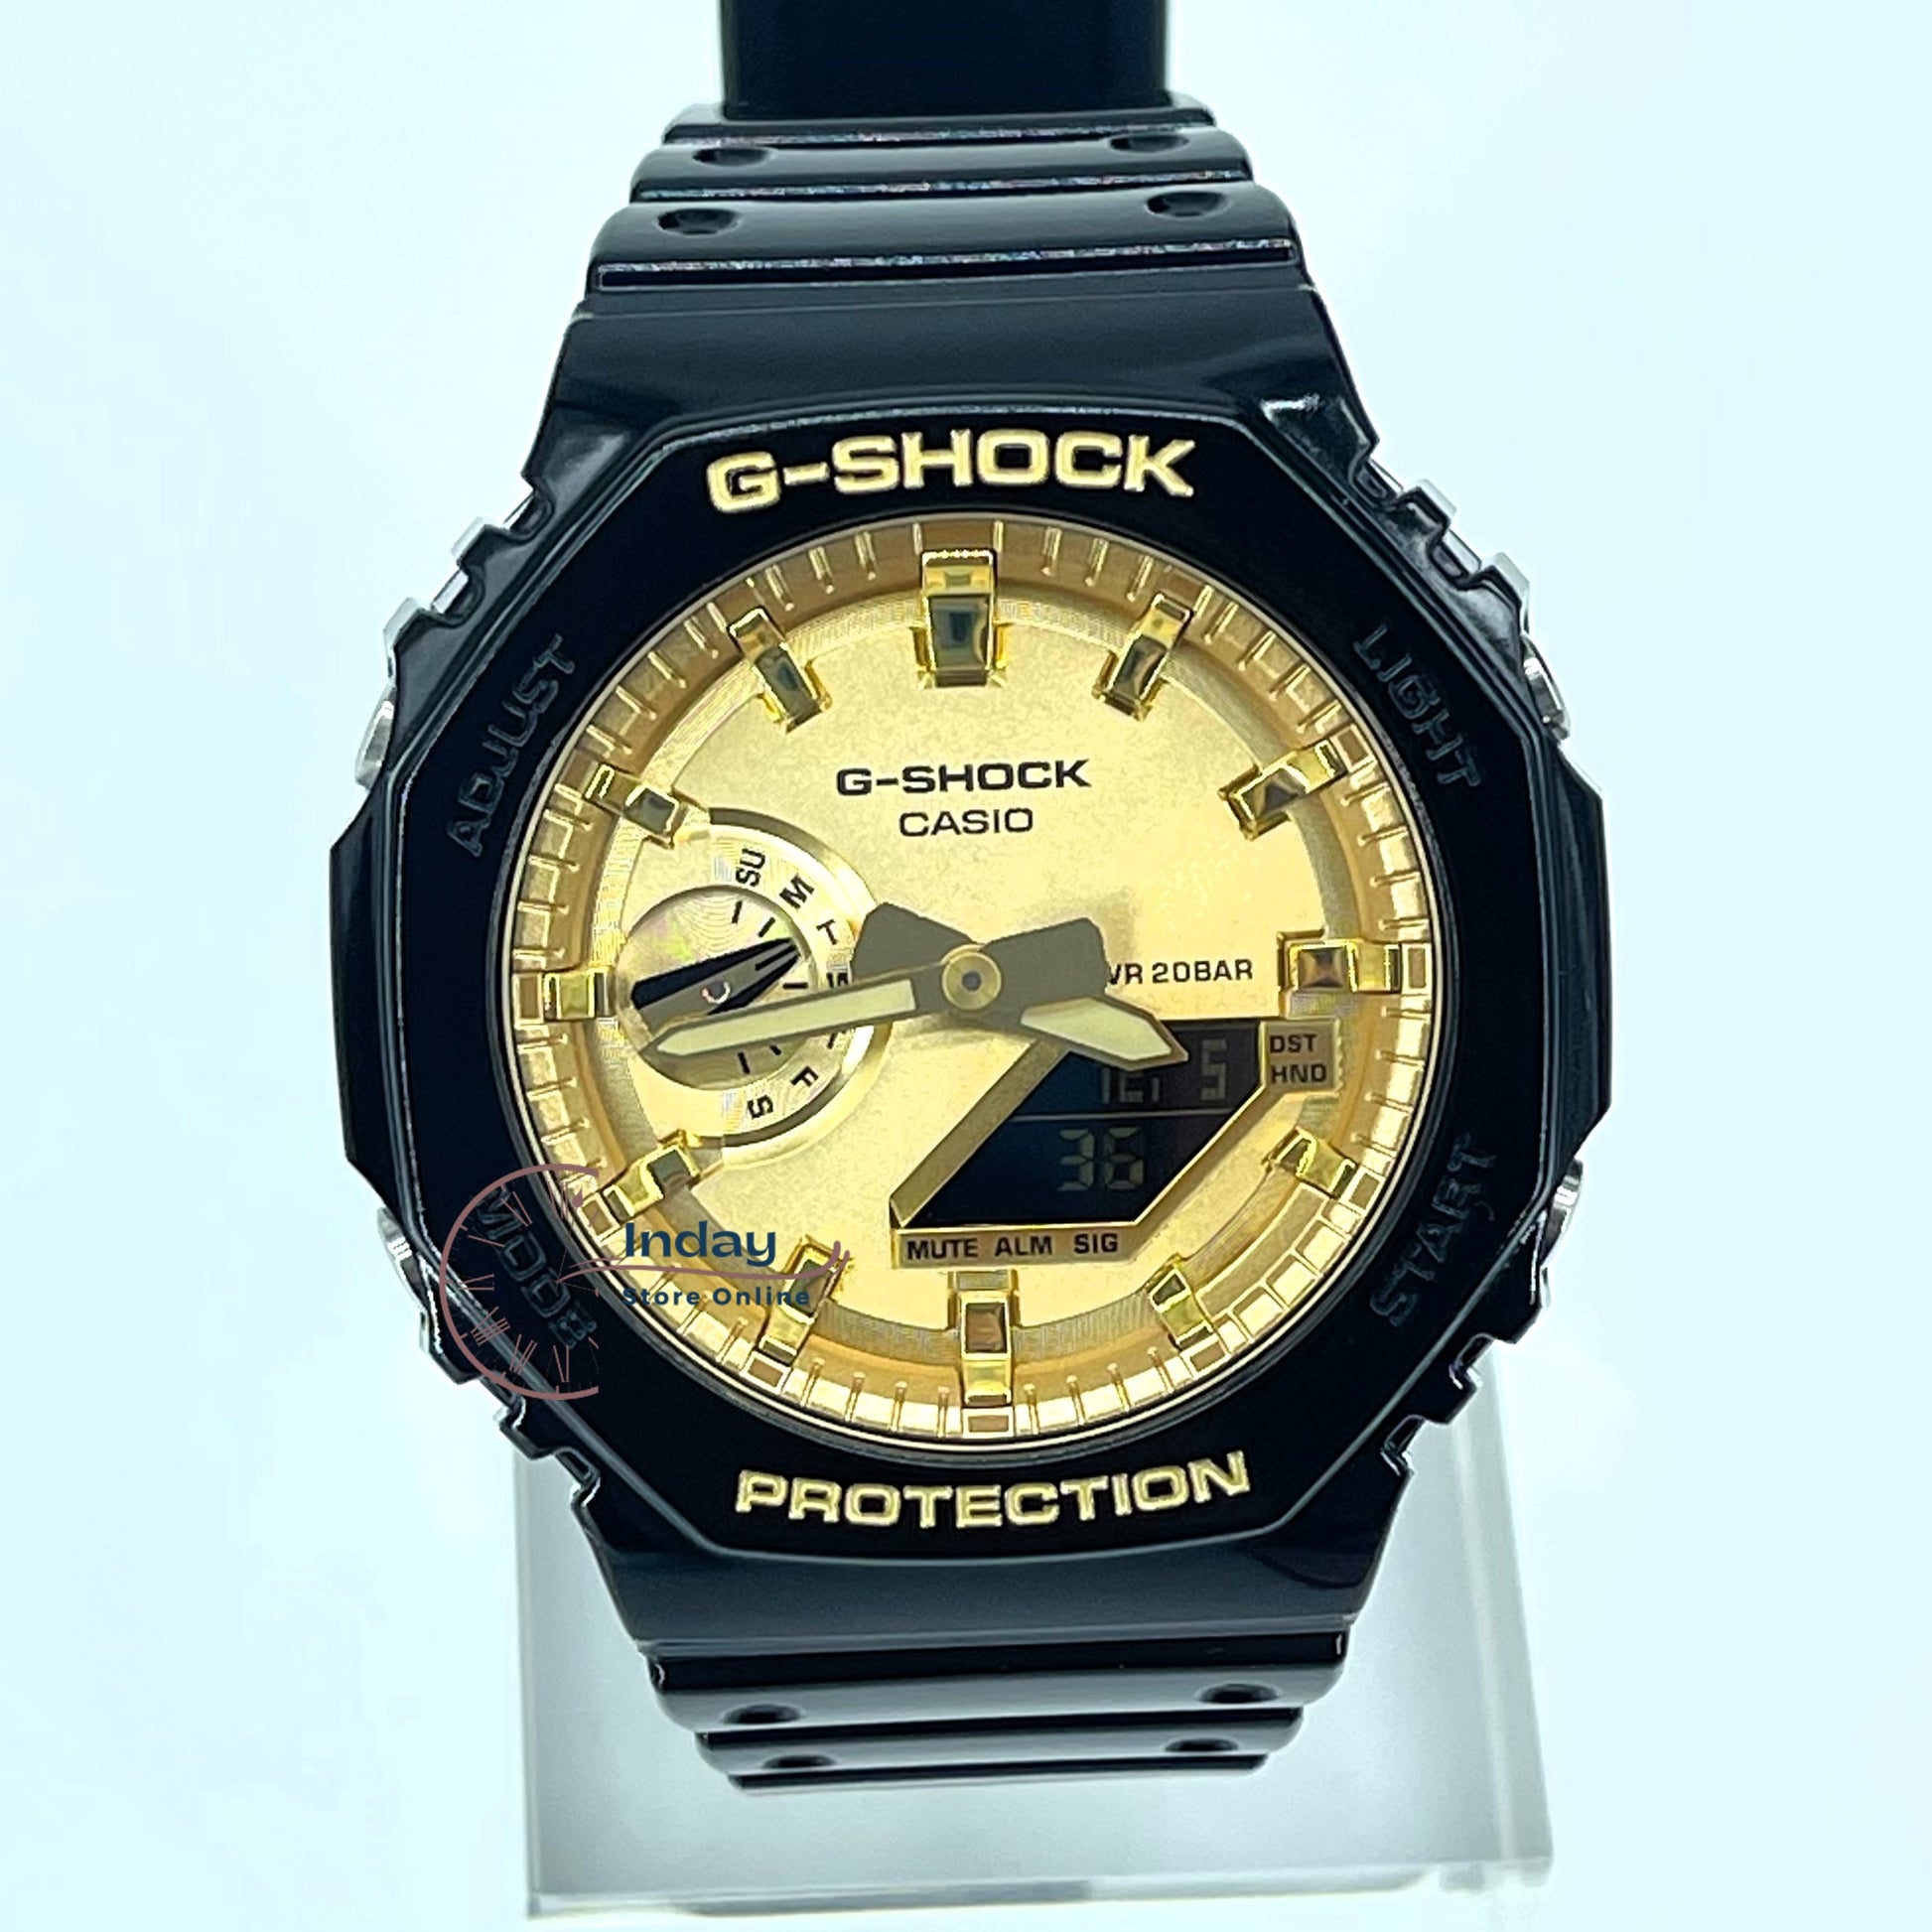 Casio G-Shock Men's Watch GA-2100GB-1A Analog-Digital 2100 Series Shoc –  indaystoreonline